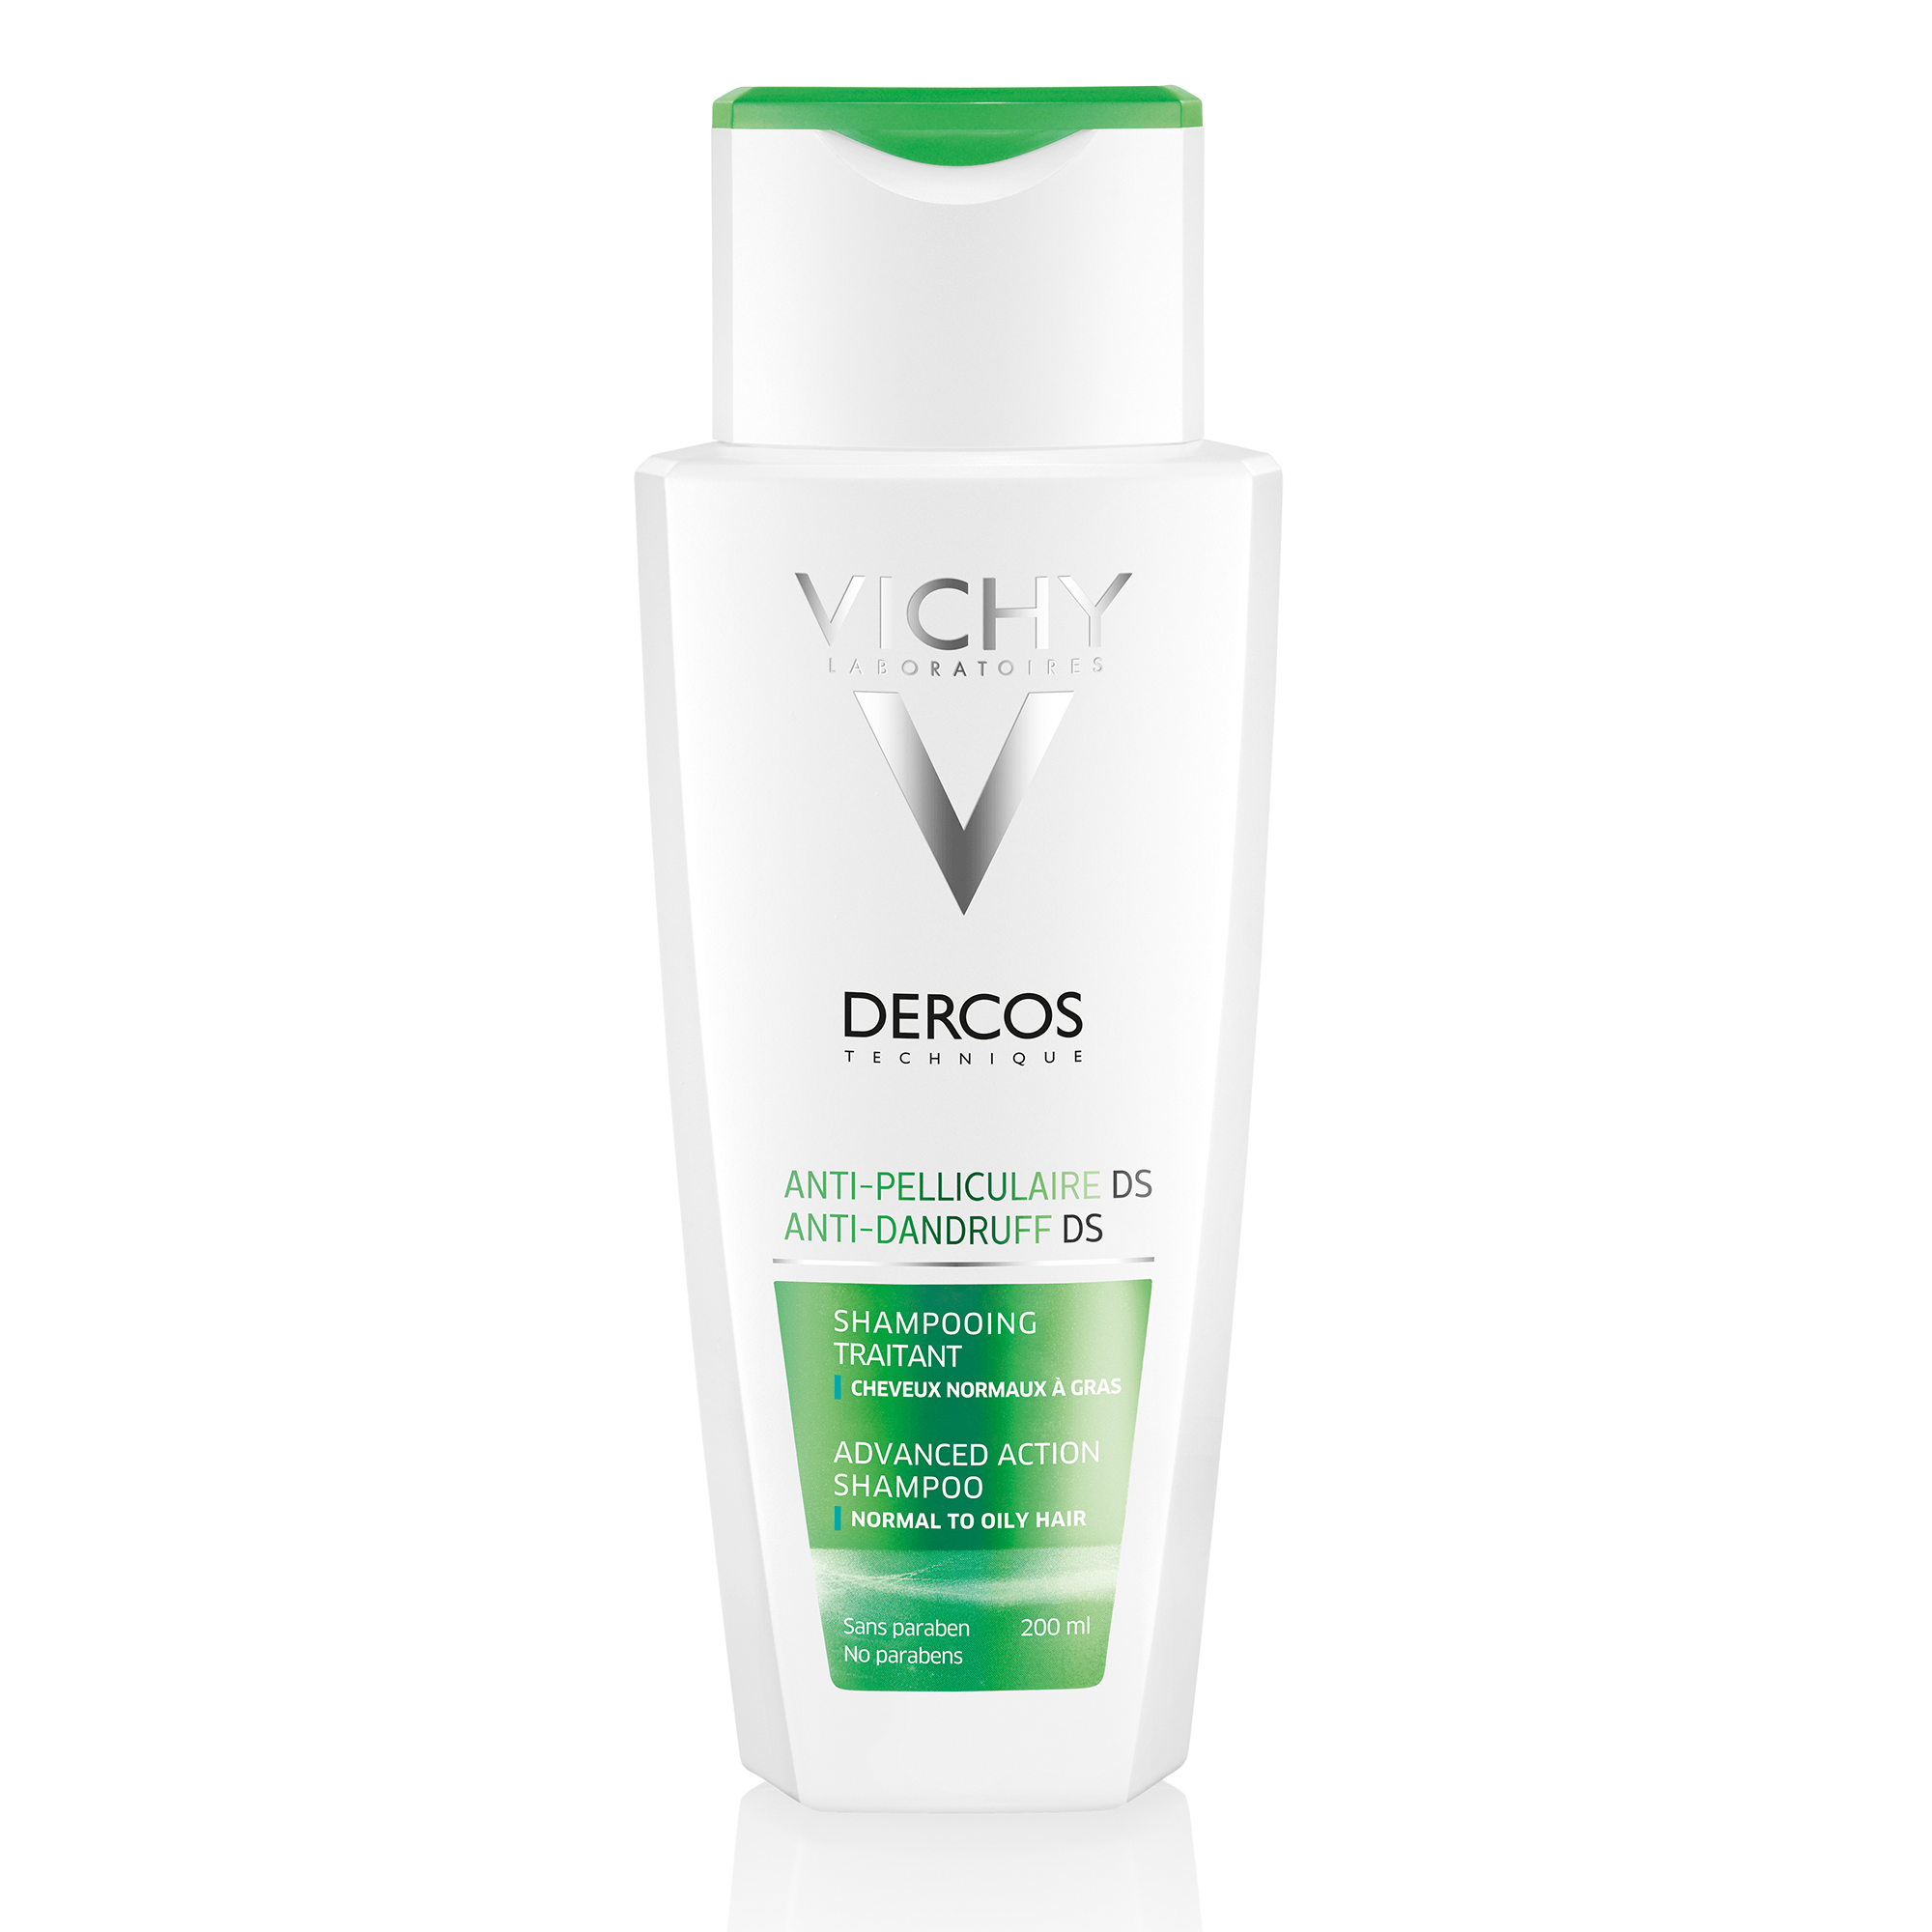 Vichy dercos shampooing anti-pelliculaire shampooing traitant cheveux gras 200 ML